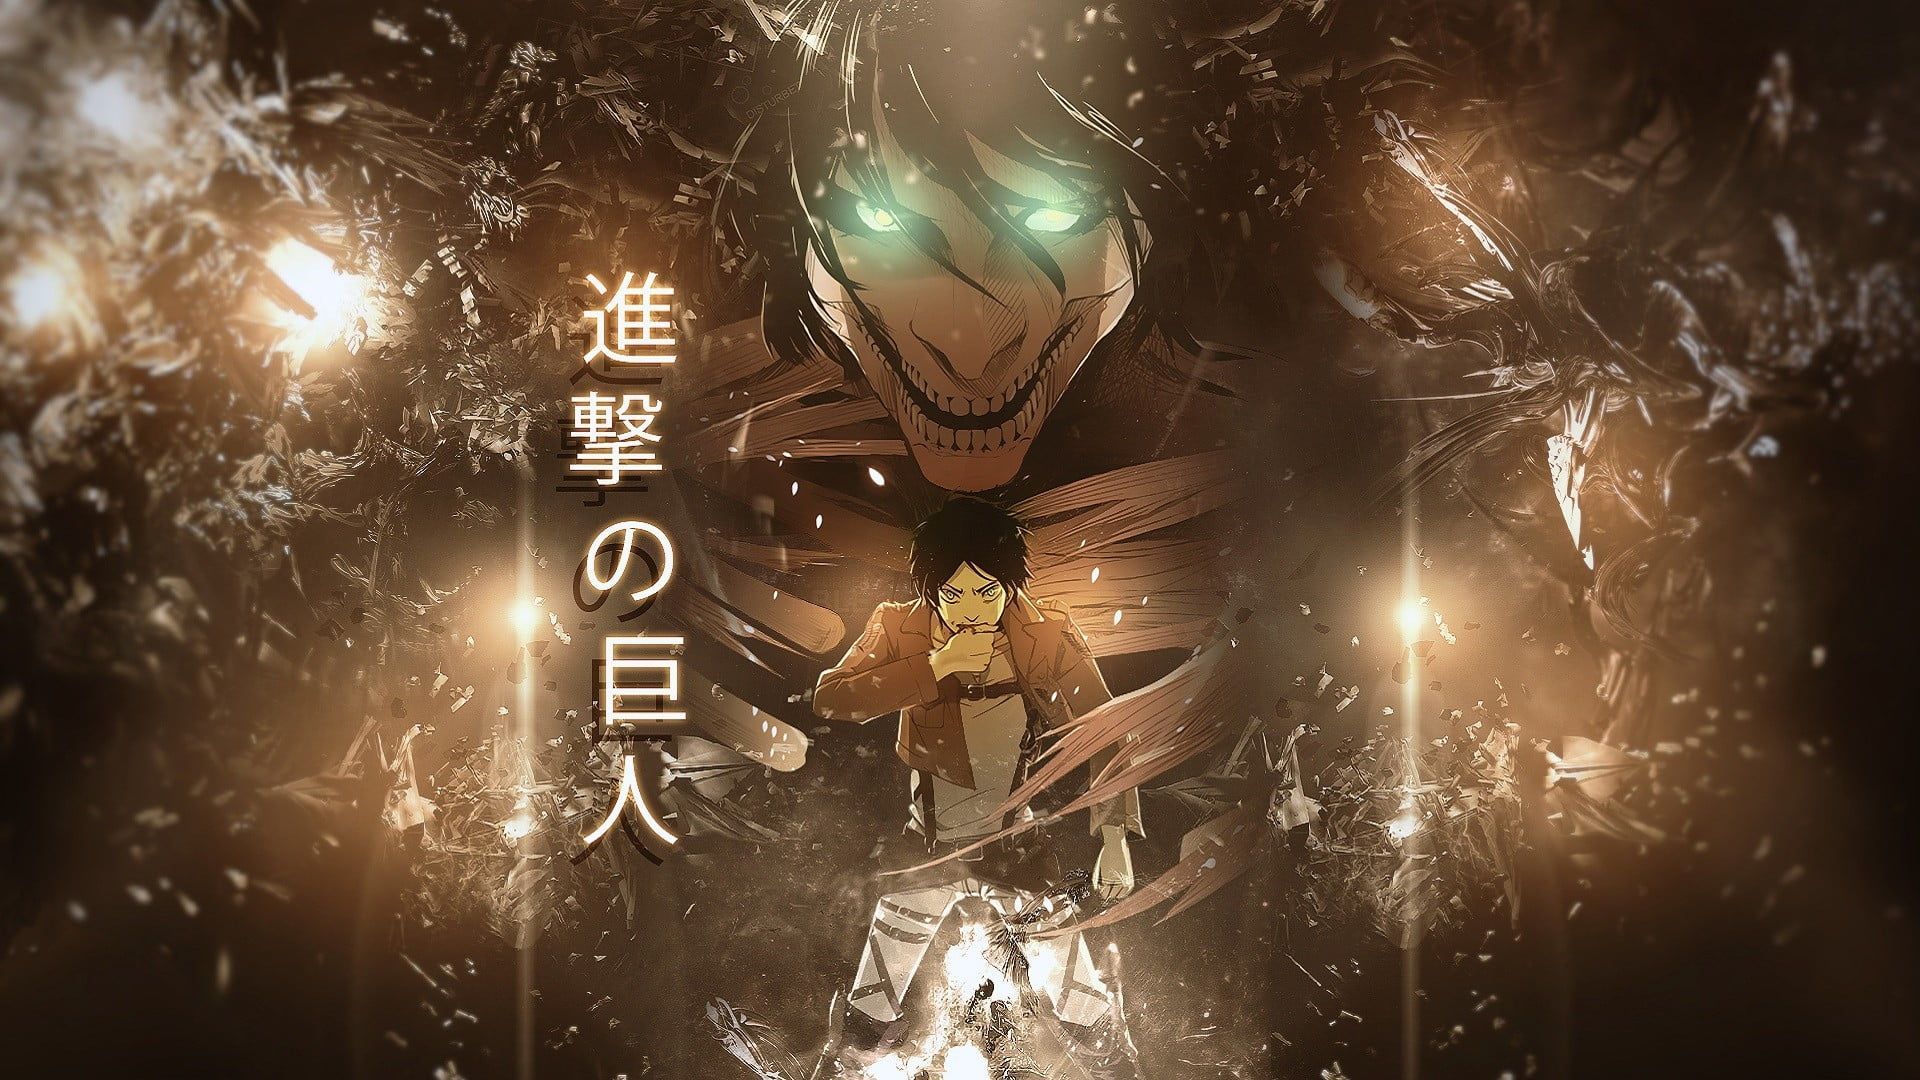 Attack on Titan wallpaper Shingeki no Kyojin Eren Jeager #anime anime boys P #wallpaper #hdwallpaper. Anime wallpaper, Attack on titan eren, Attack on titan